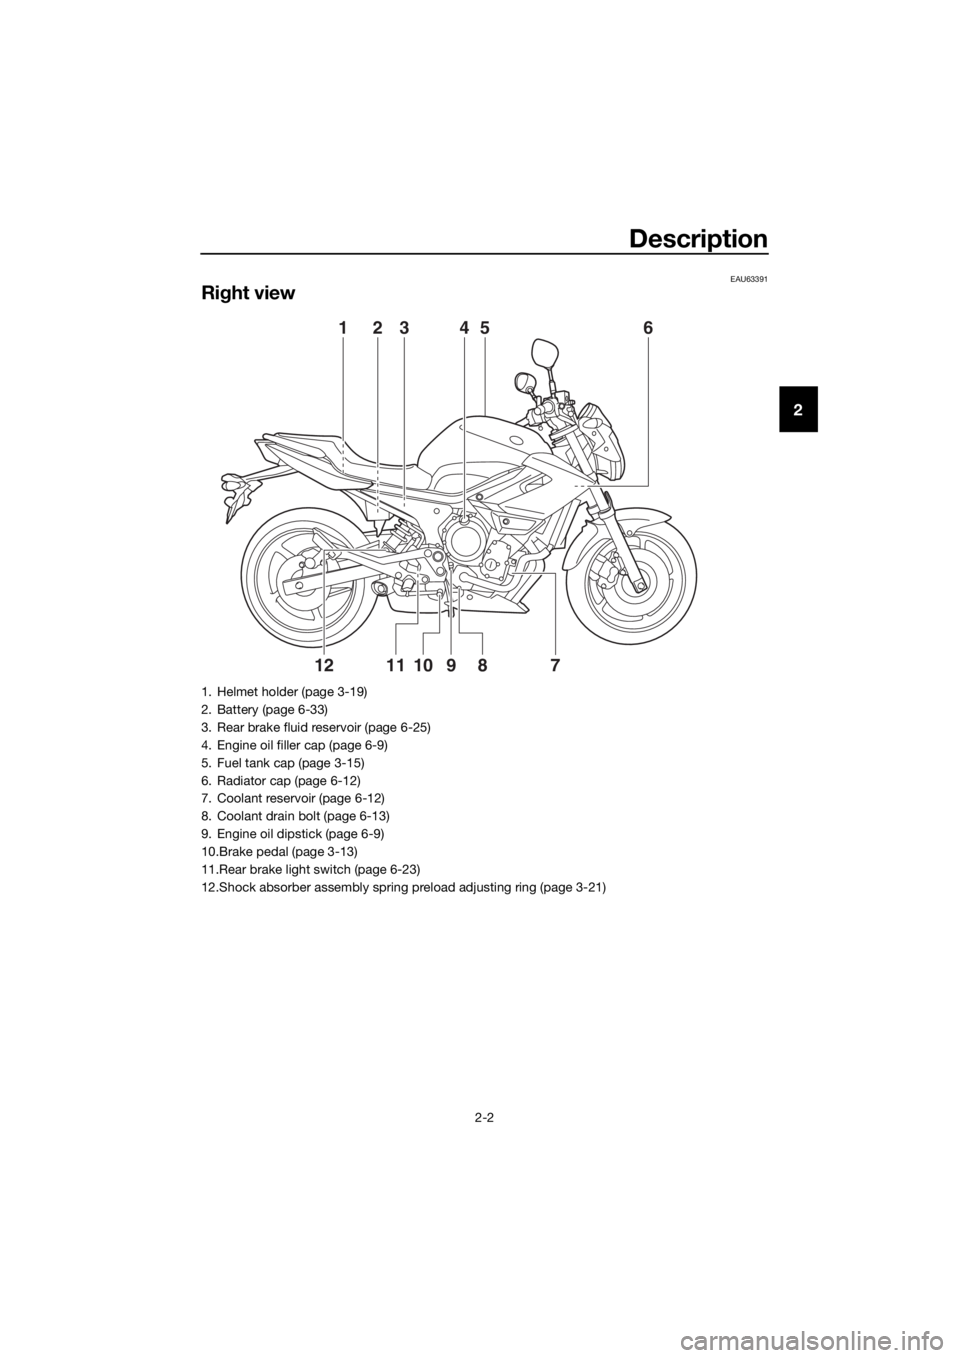 YAMAHA XJ6-N 2016  Owners Manual Description
2-2
2
EAU63391
Right view
123 456
78910
1112
1. Helmet holder (page 3-19)
2. Battery (page 6-33)
3. Rear brake fluid reservoir (page 6-25)
4. Engine oil filler cap (page 6-9)
5. Fuel tank 